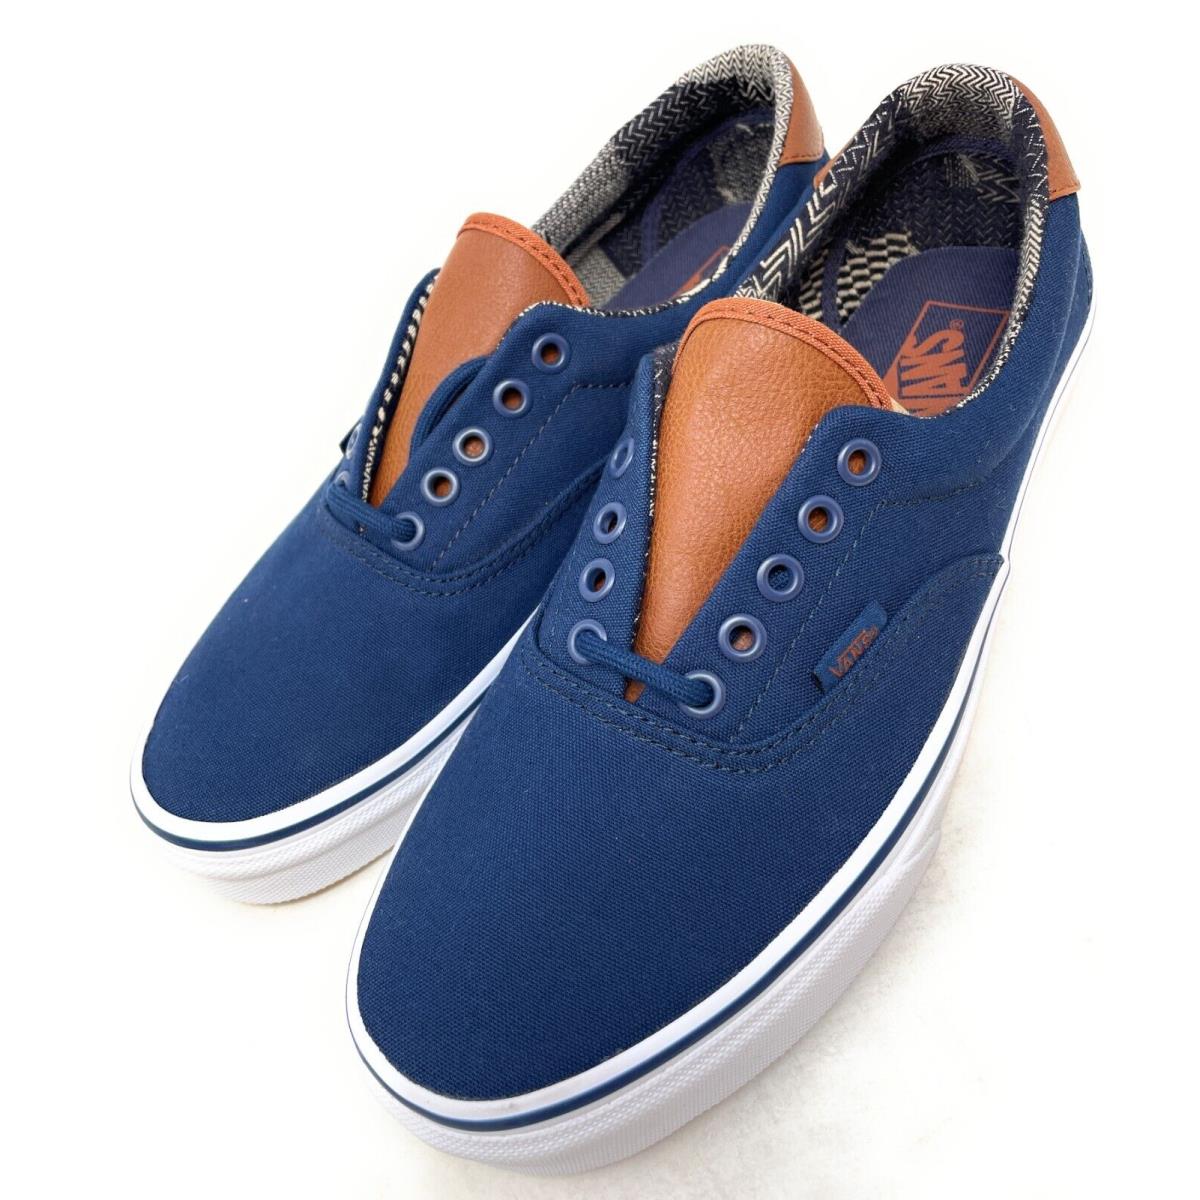 Vans Era 59 C L Dress Blues/materia Skateboarding Shoes Size 9 M US Mens - Blue